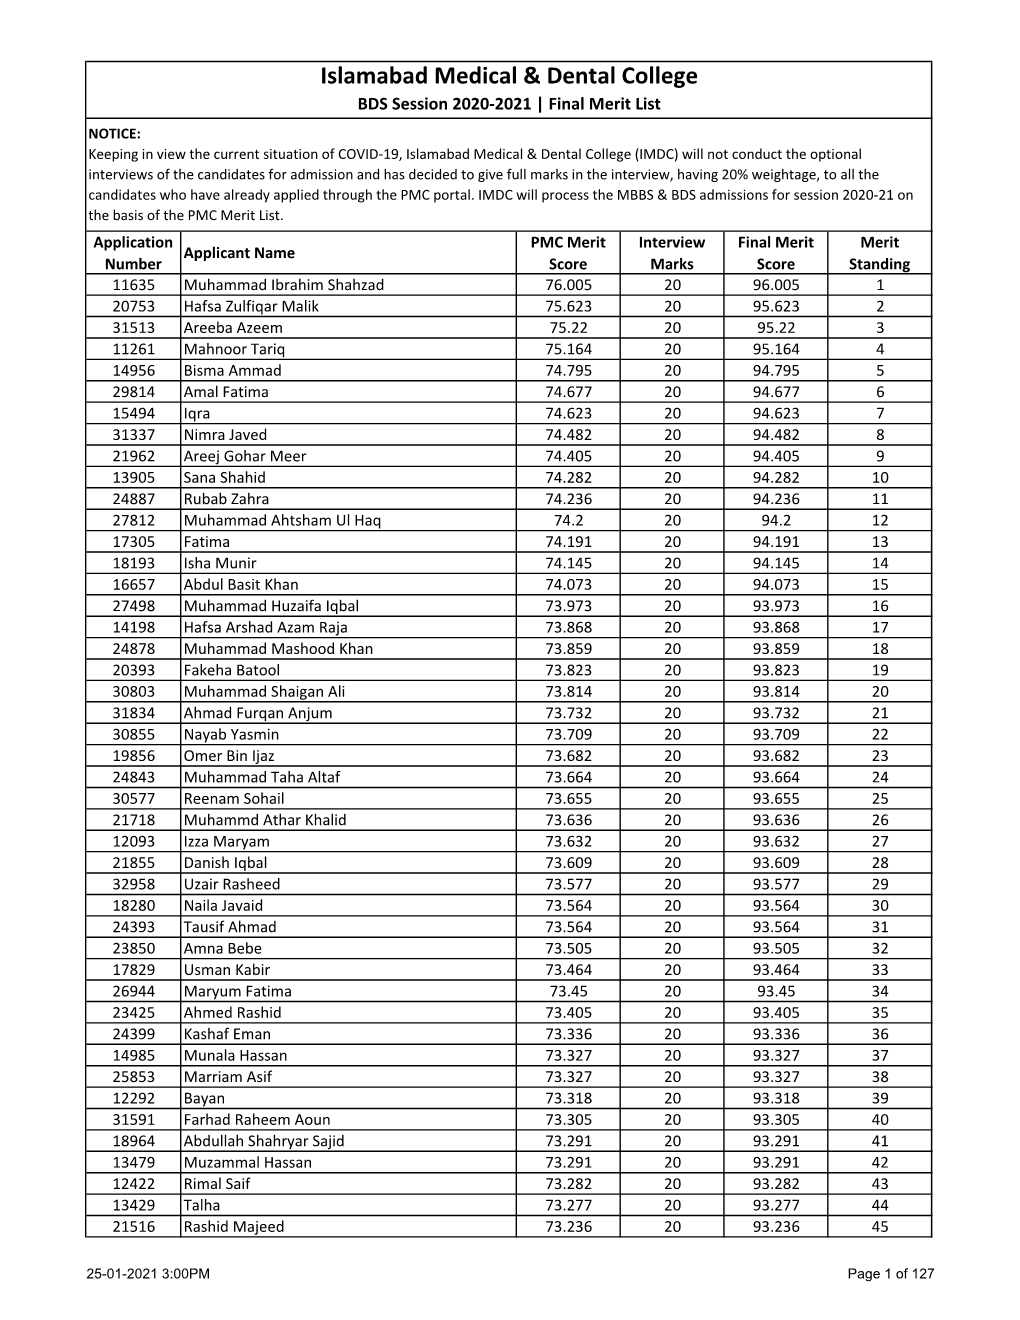 Merit List BDS 2020-21.Pdf